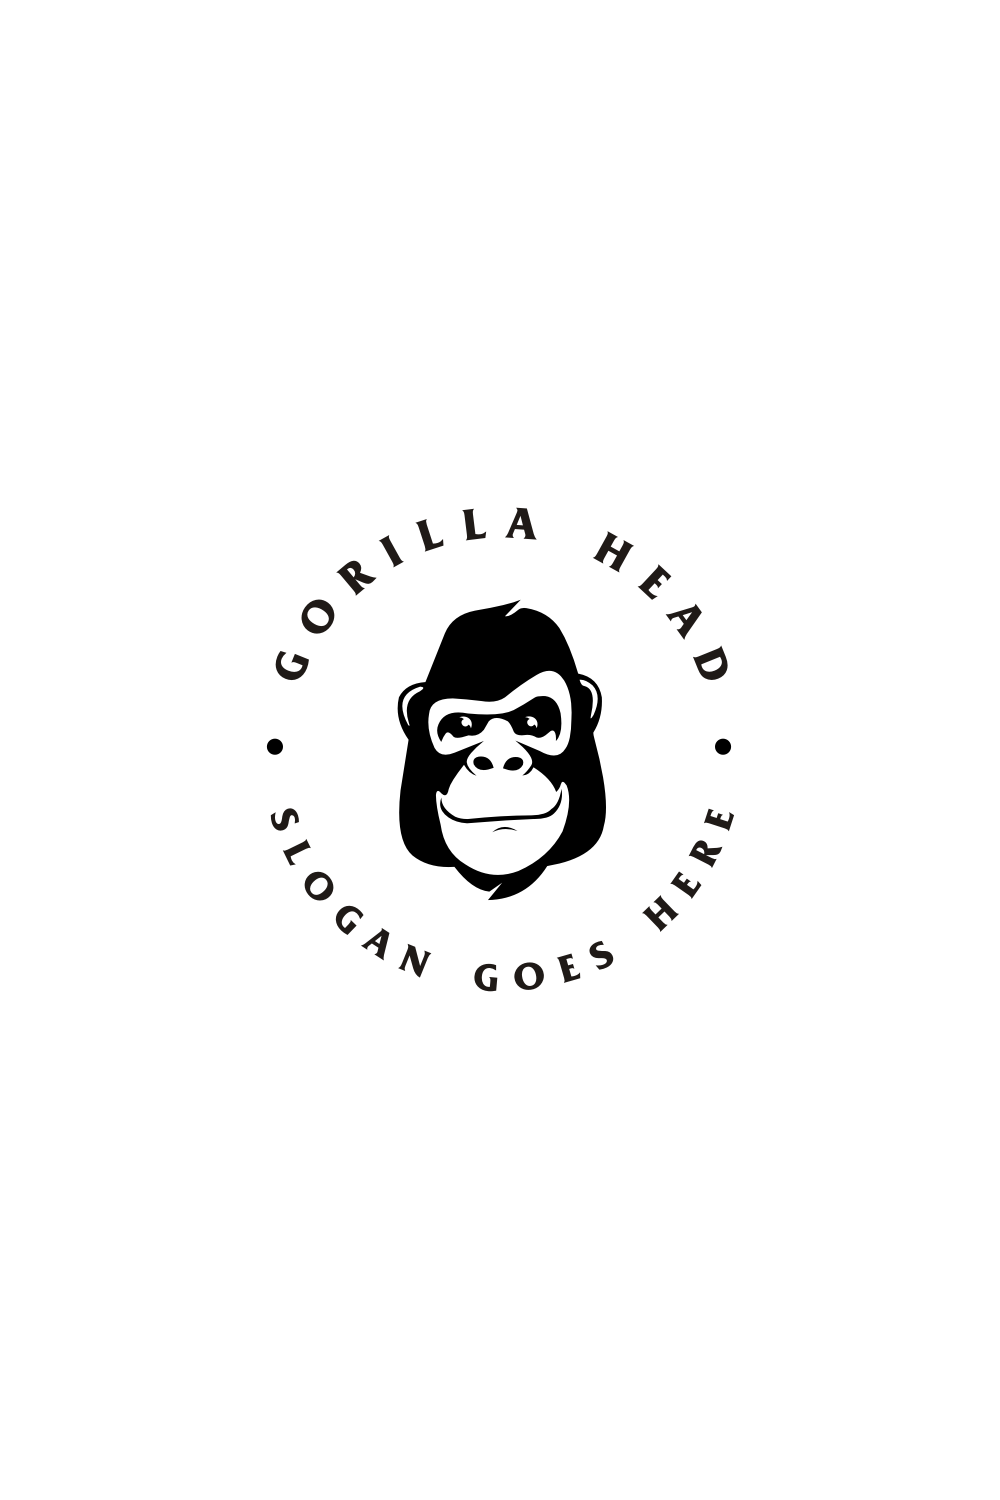 Gorilla With Circle Logo Vector Pinterest image.